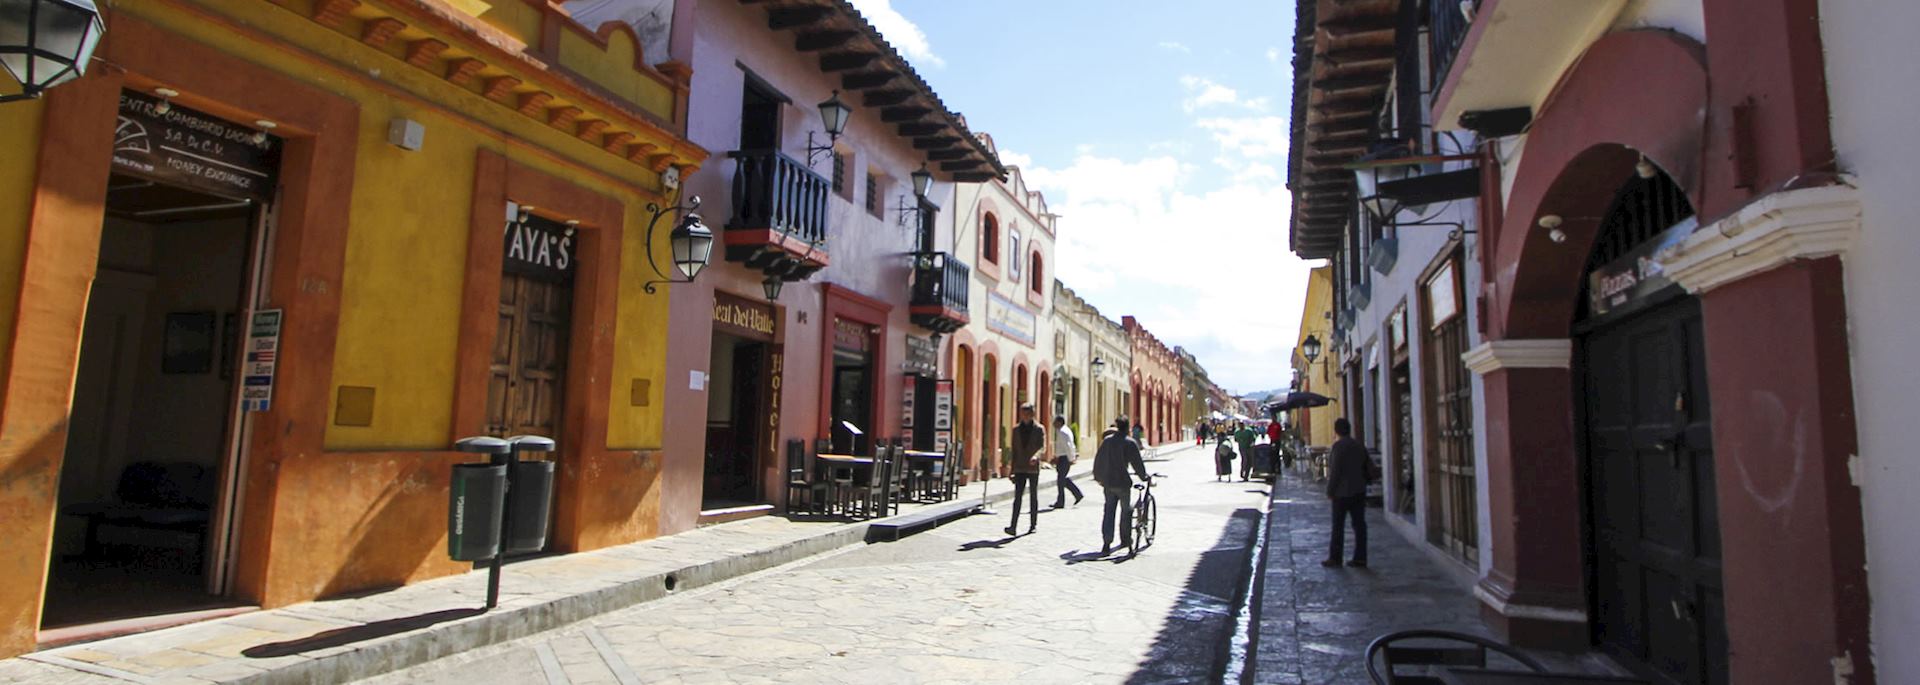 A street in San Cristóbal de las Casas